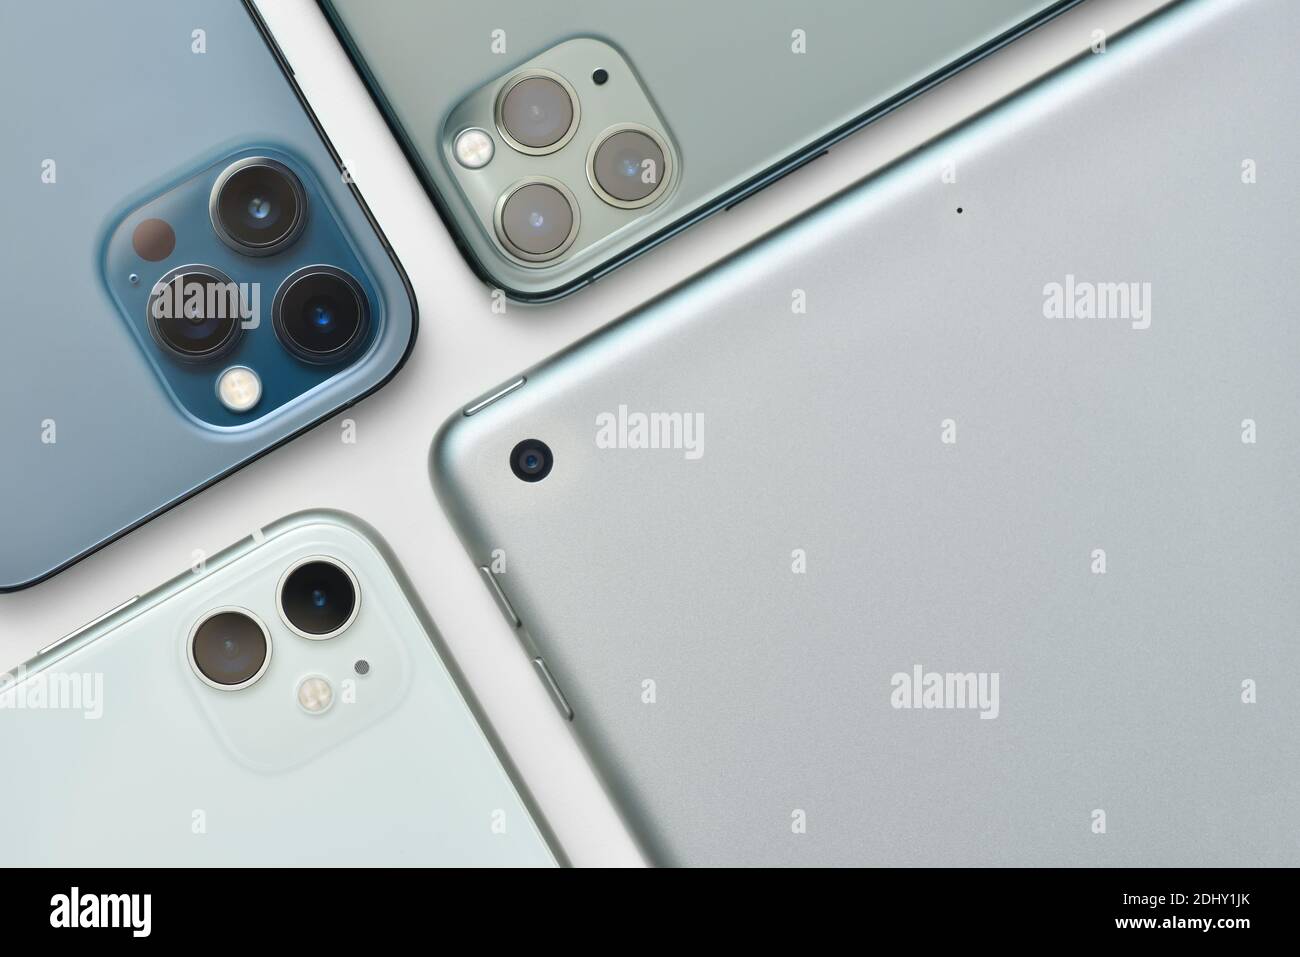 STARIY OSKOL, RUSSIA - DECEMBER 10, 2020: Camera lenses of modern Apple smartphones iPhone 11 and 12 Stock Photo